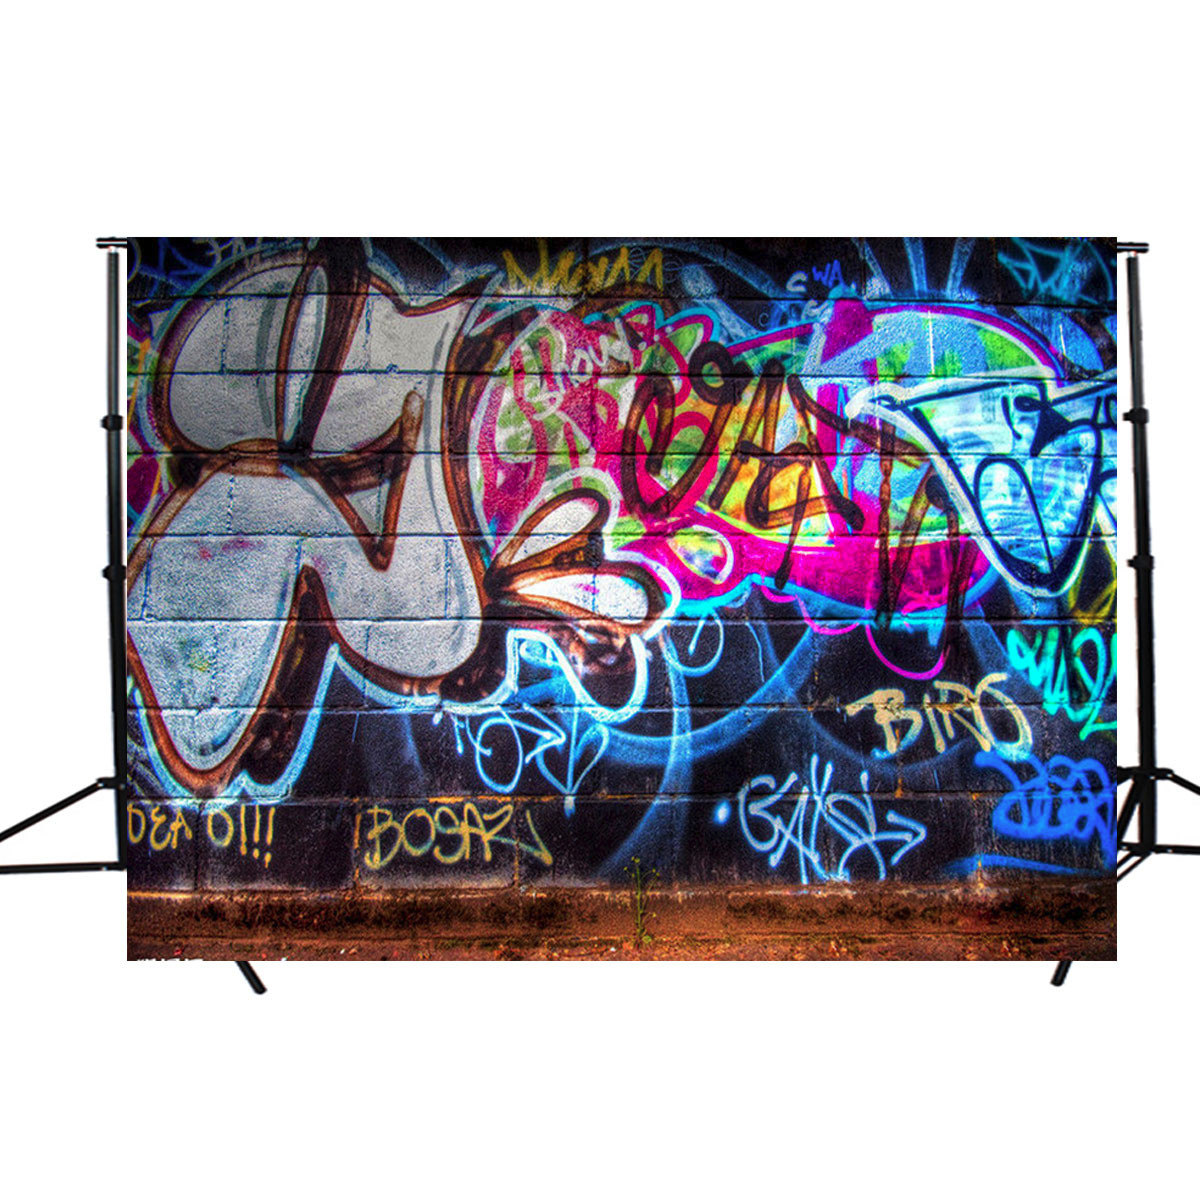 

5x3FT Graffiti Wall Theme Photography Background Photo Backdrop Studio Props